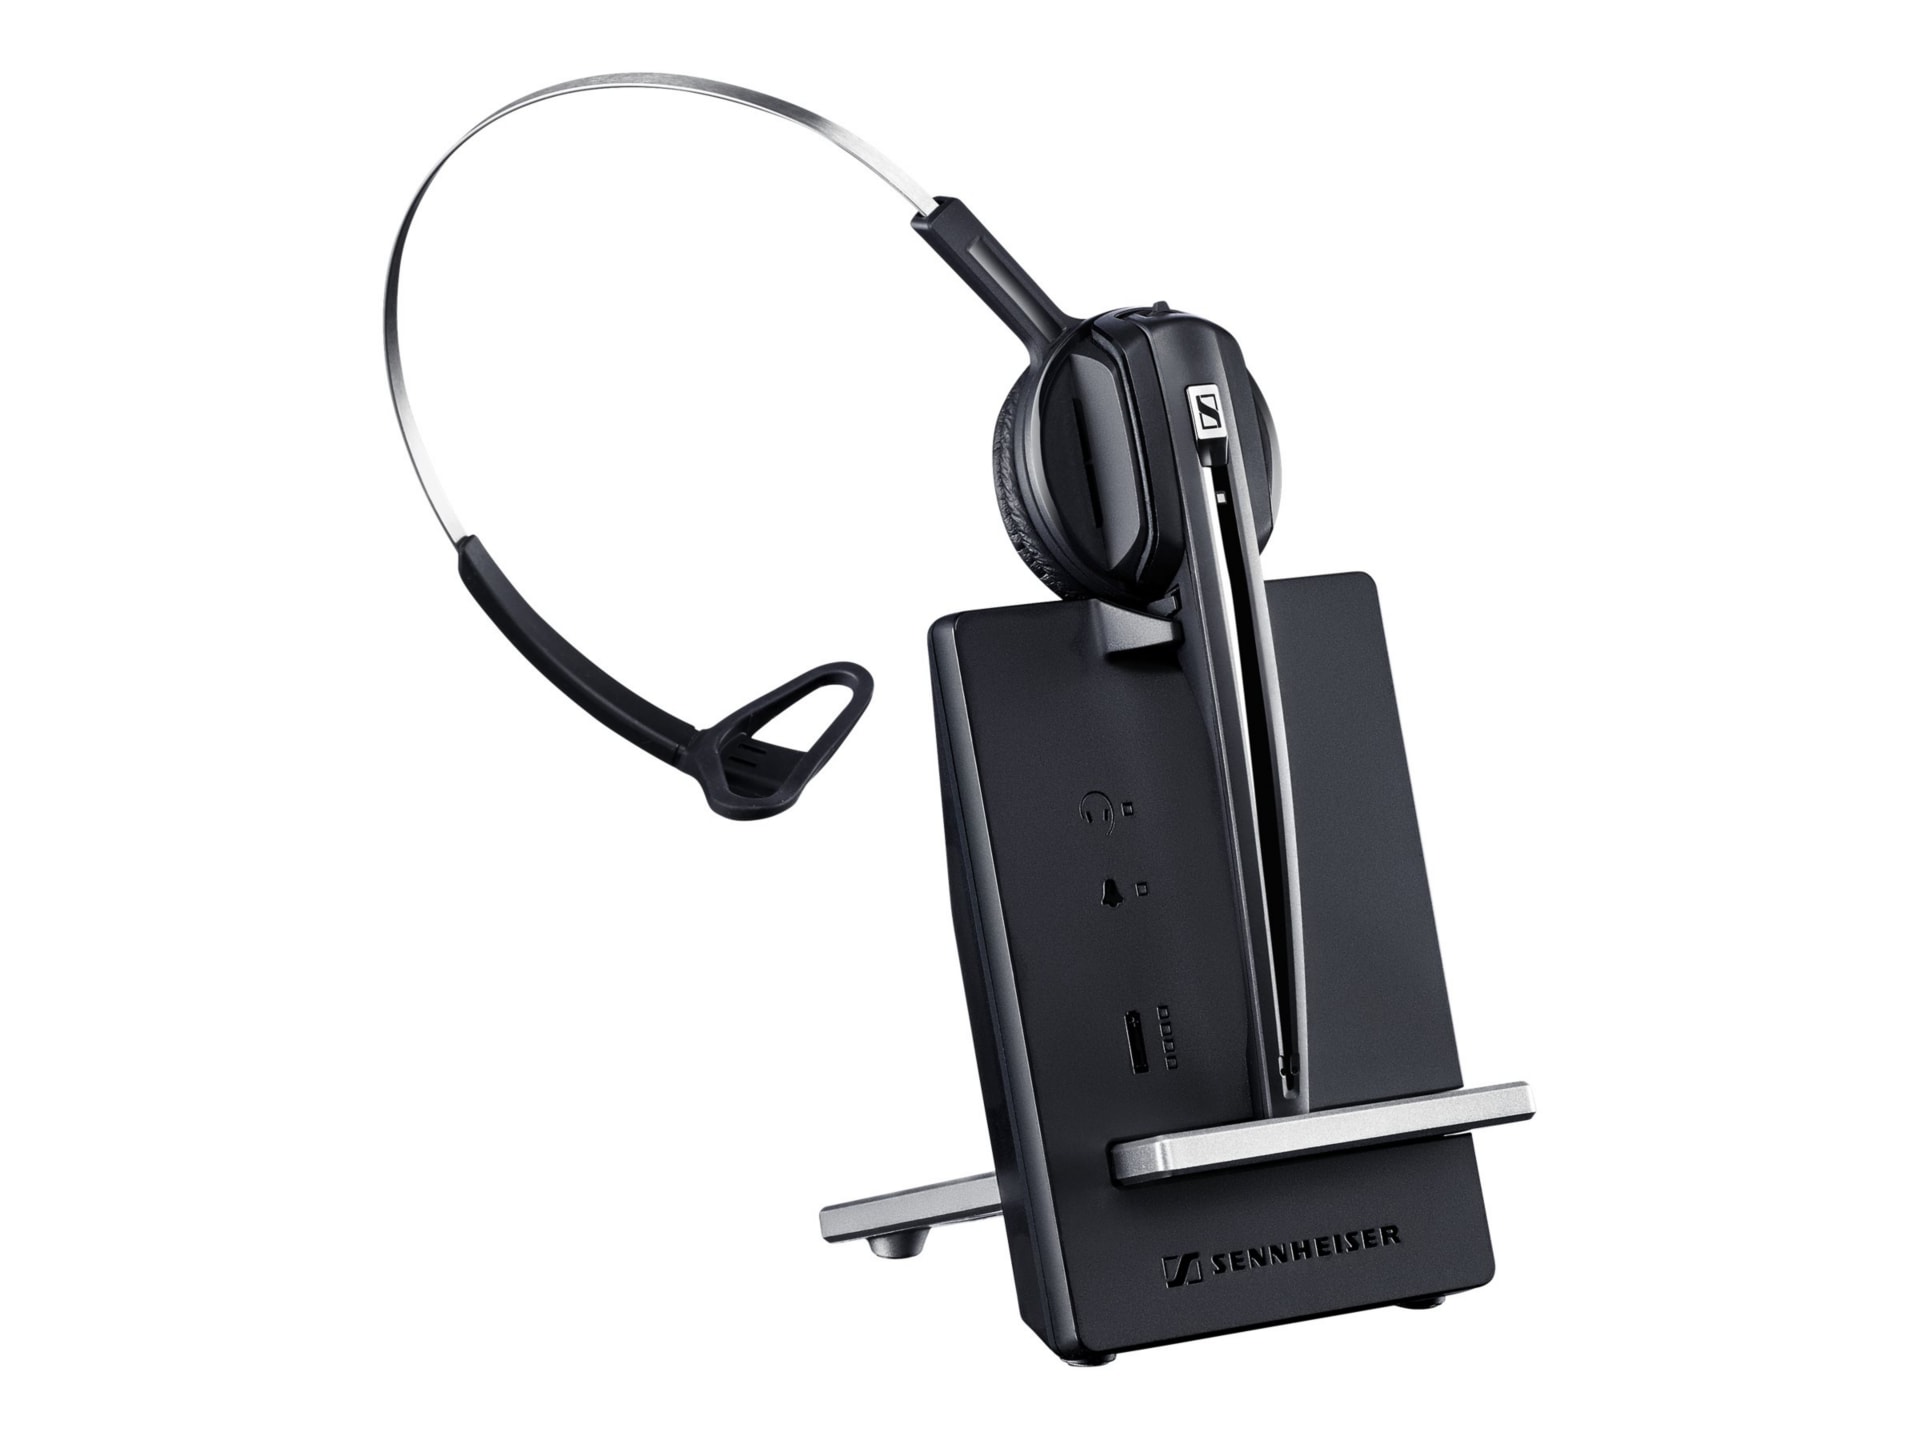 EPOS I SENNHEISER IMPACT D 10 Phone - headset